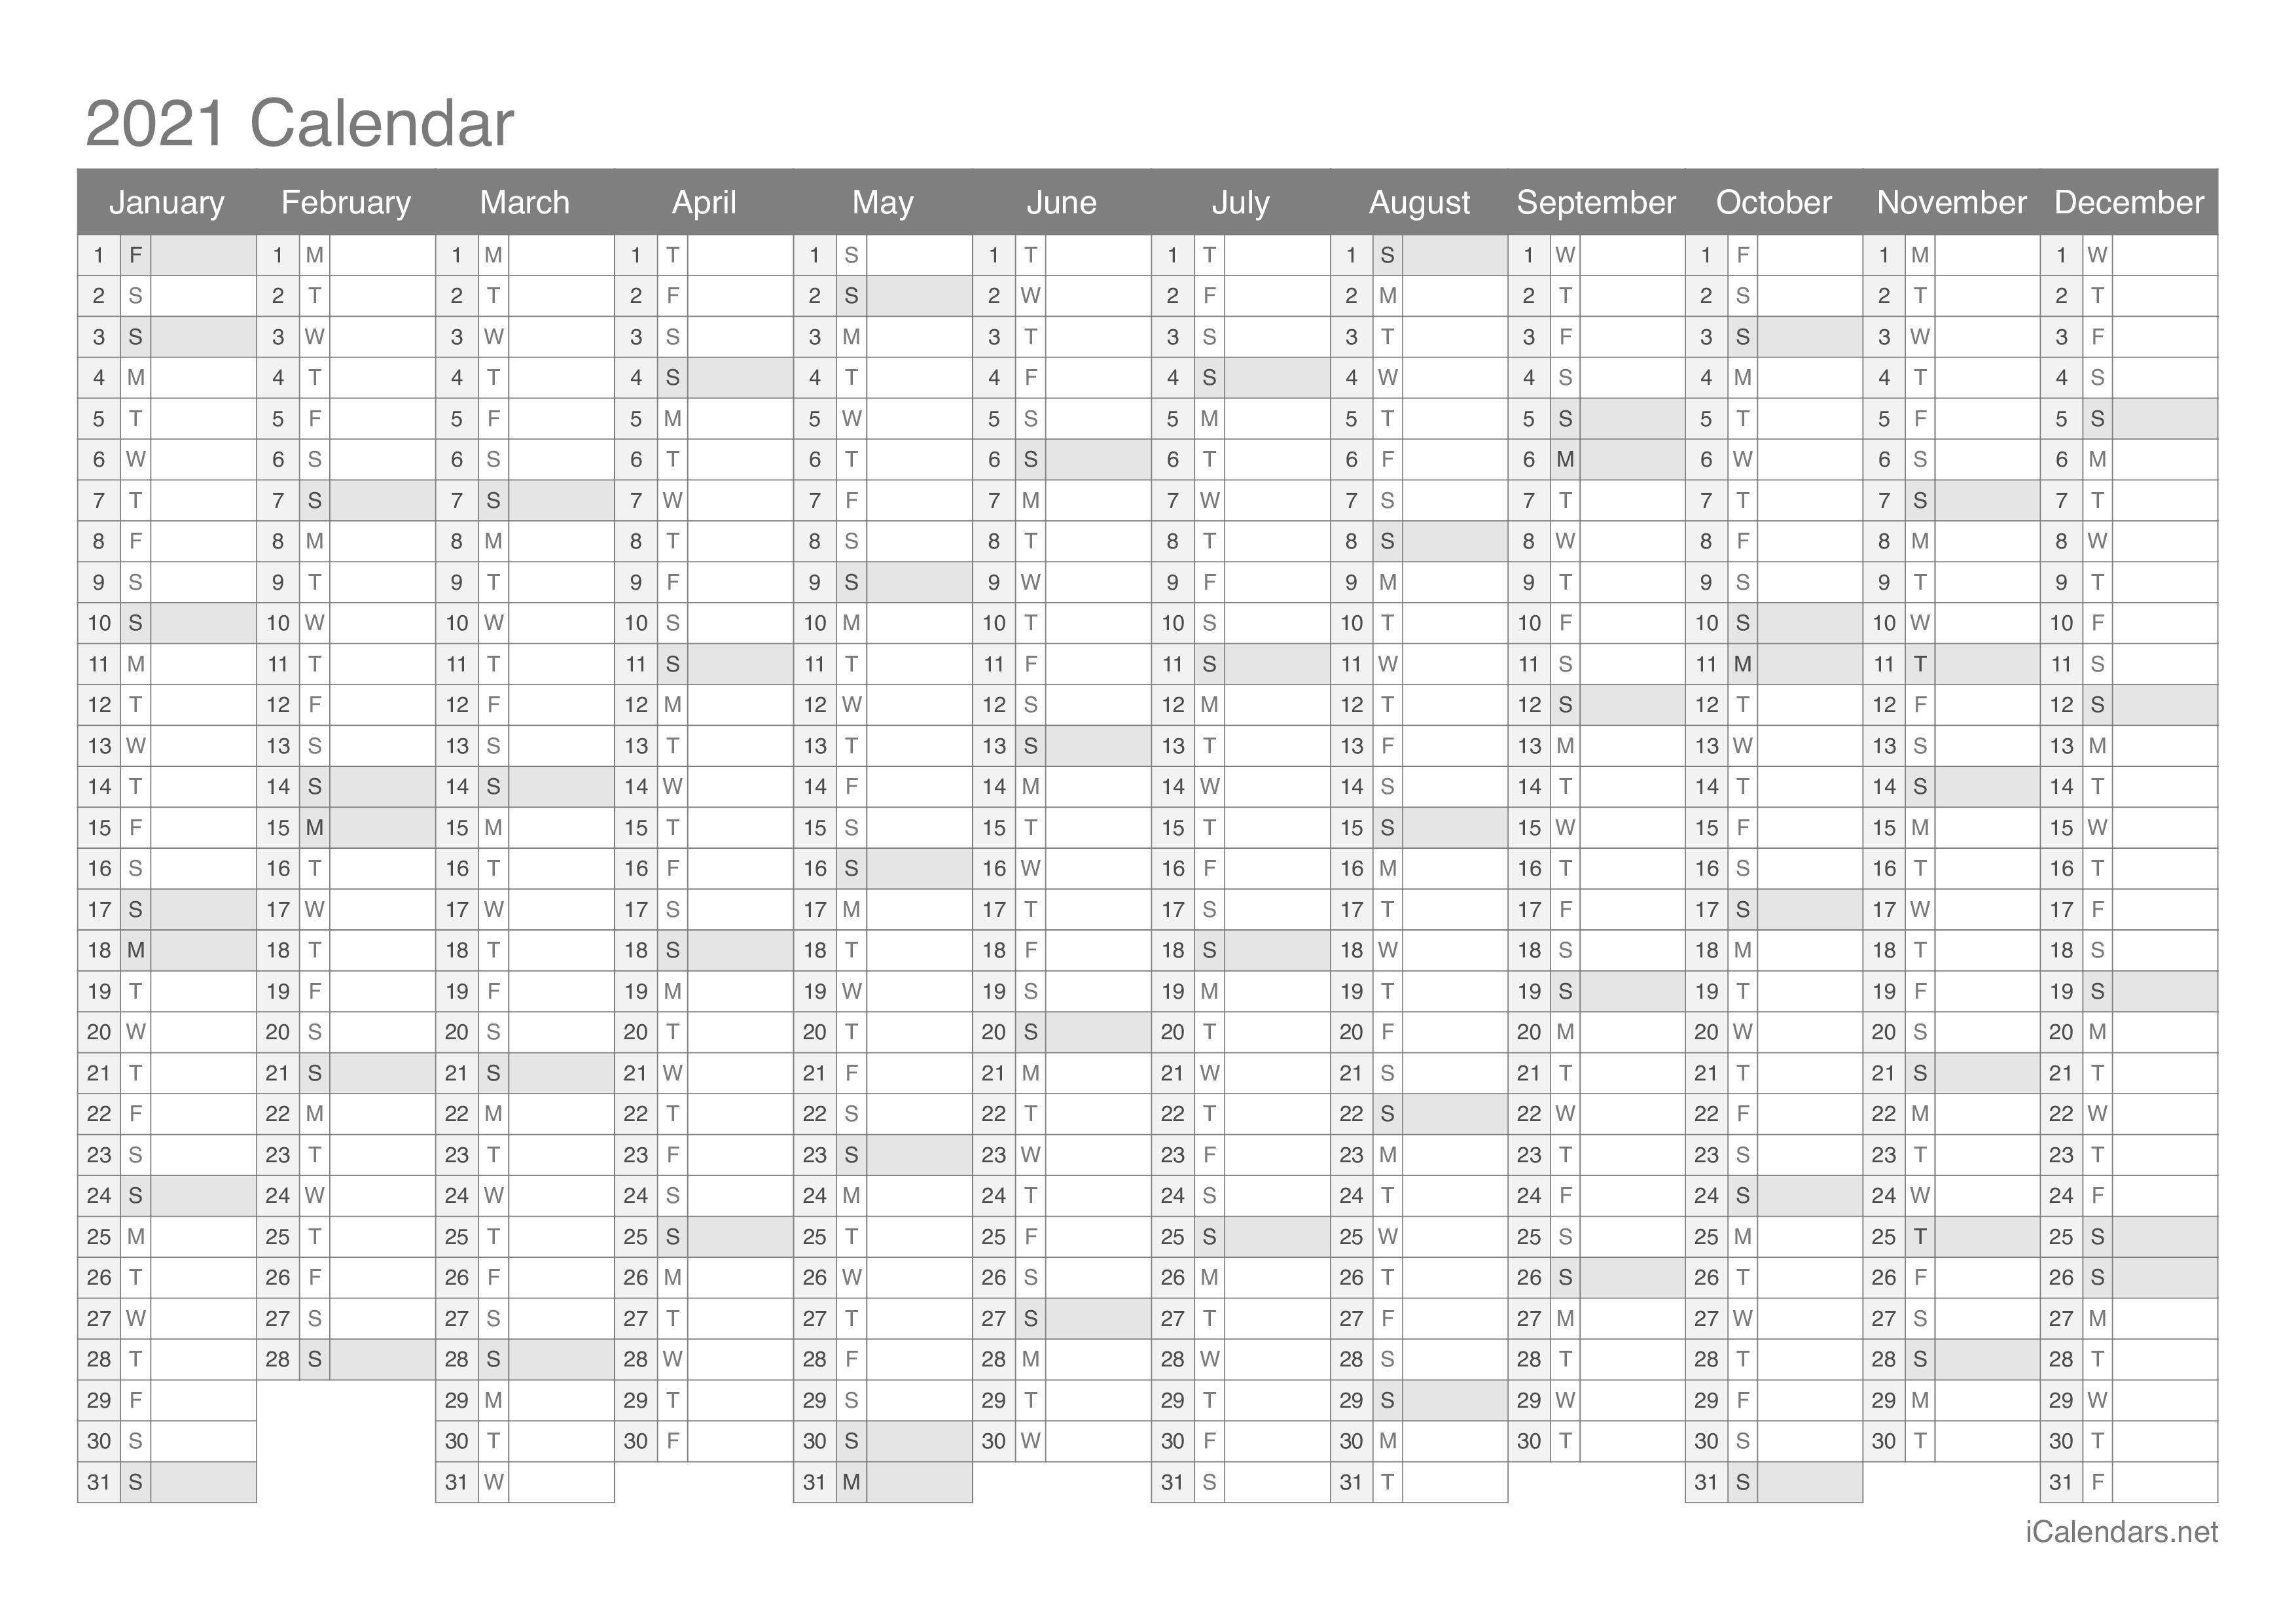 2021 Printable Calendar - Pdf Or Excel - Icalendars Excel Yearly Calendar 2021